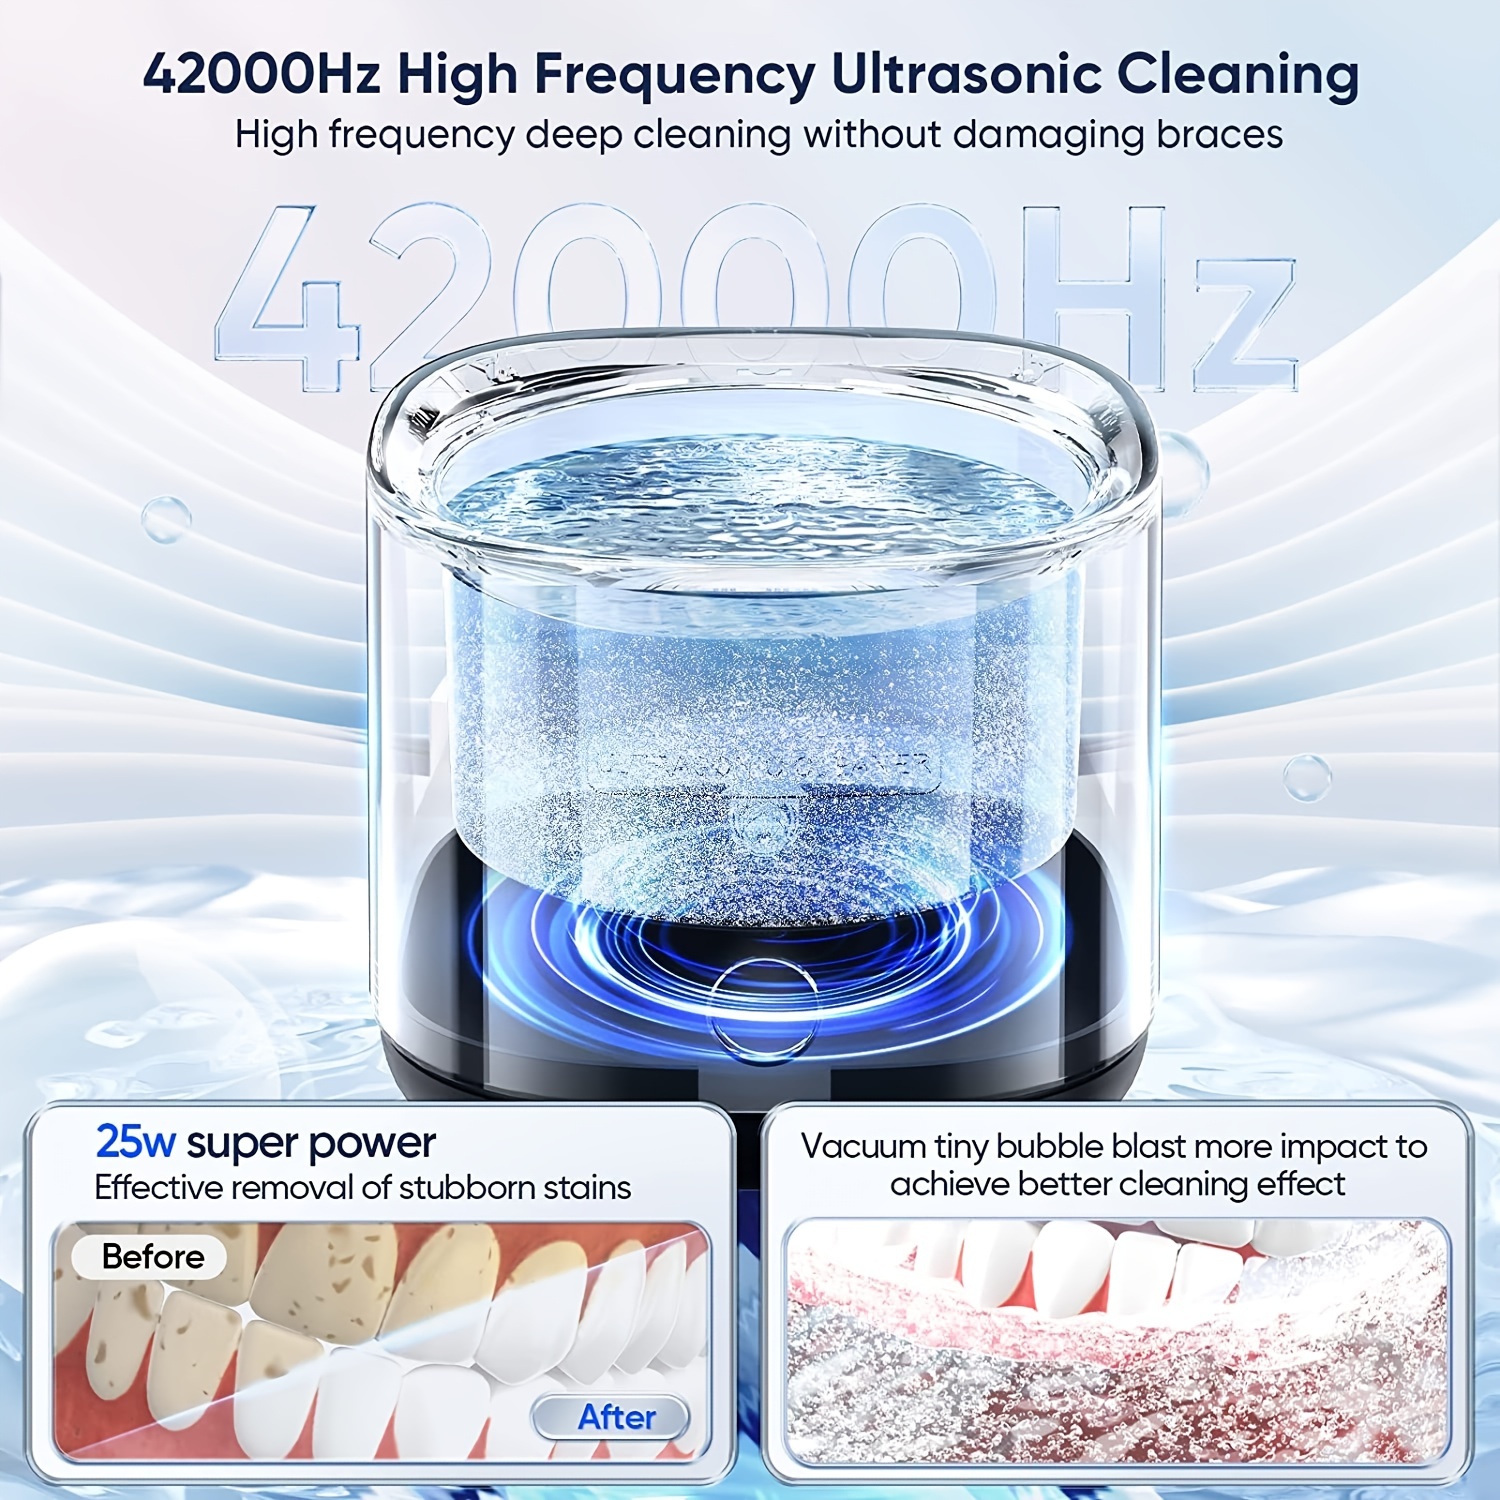 Ultrasonic cleaning equipment. Ultrasonic cleaner